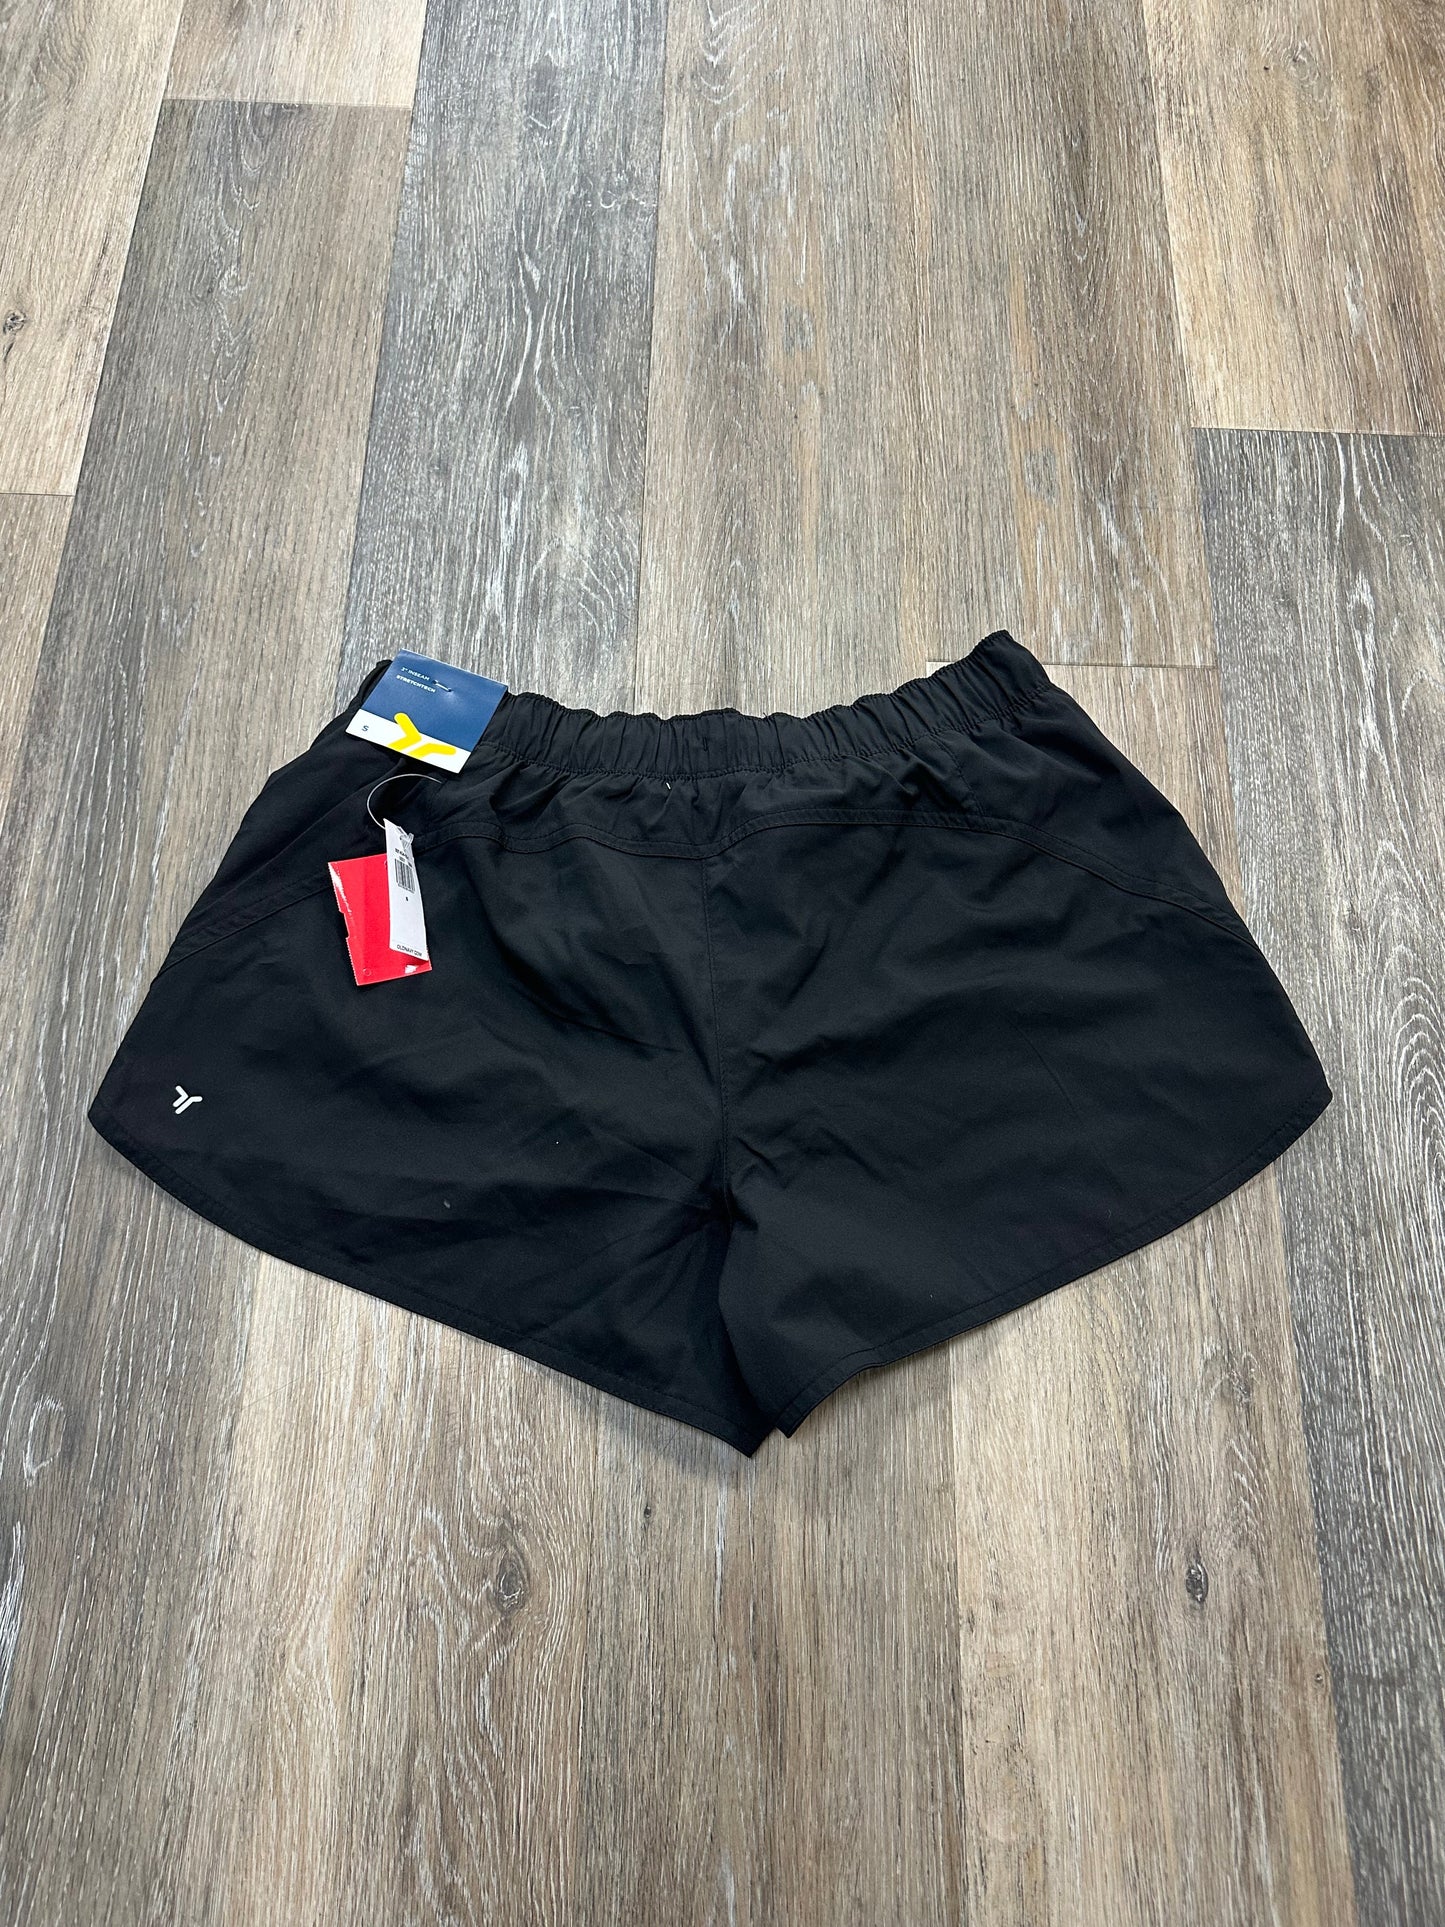 Black Athletic Shorts Old Navy, Size S